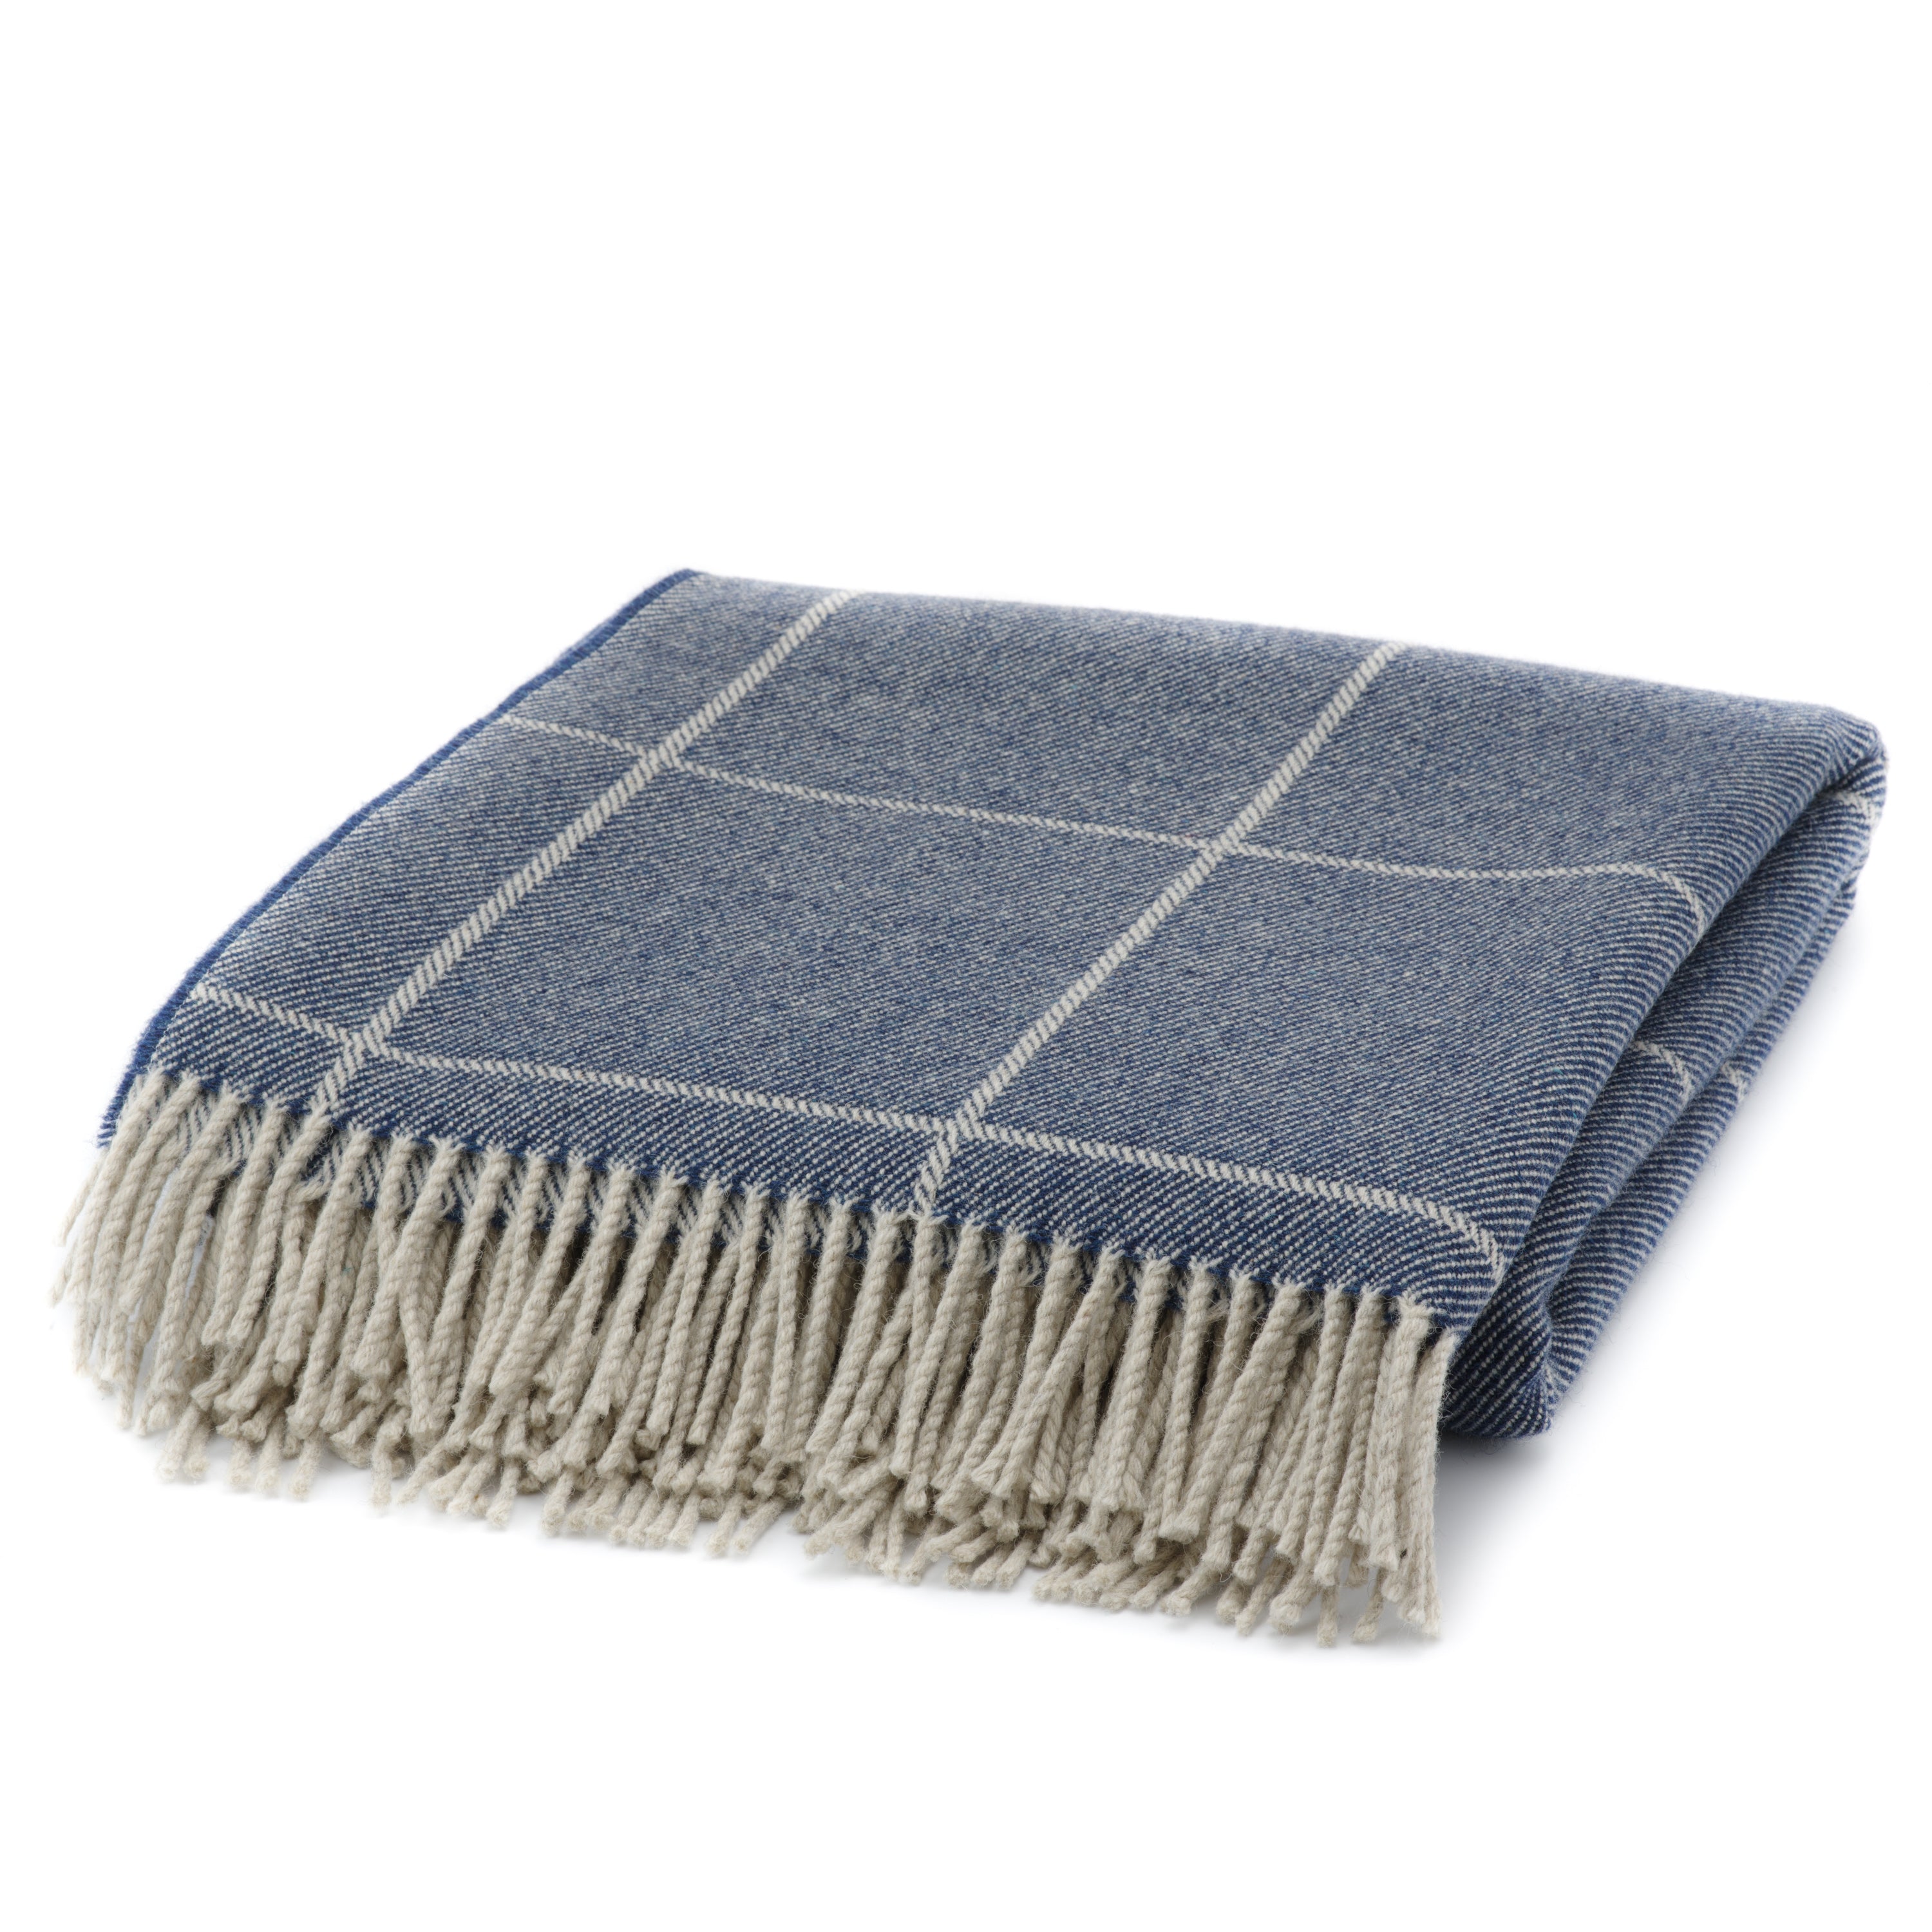 Inchyra Scottish Wool Throw / Indigo